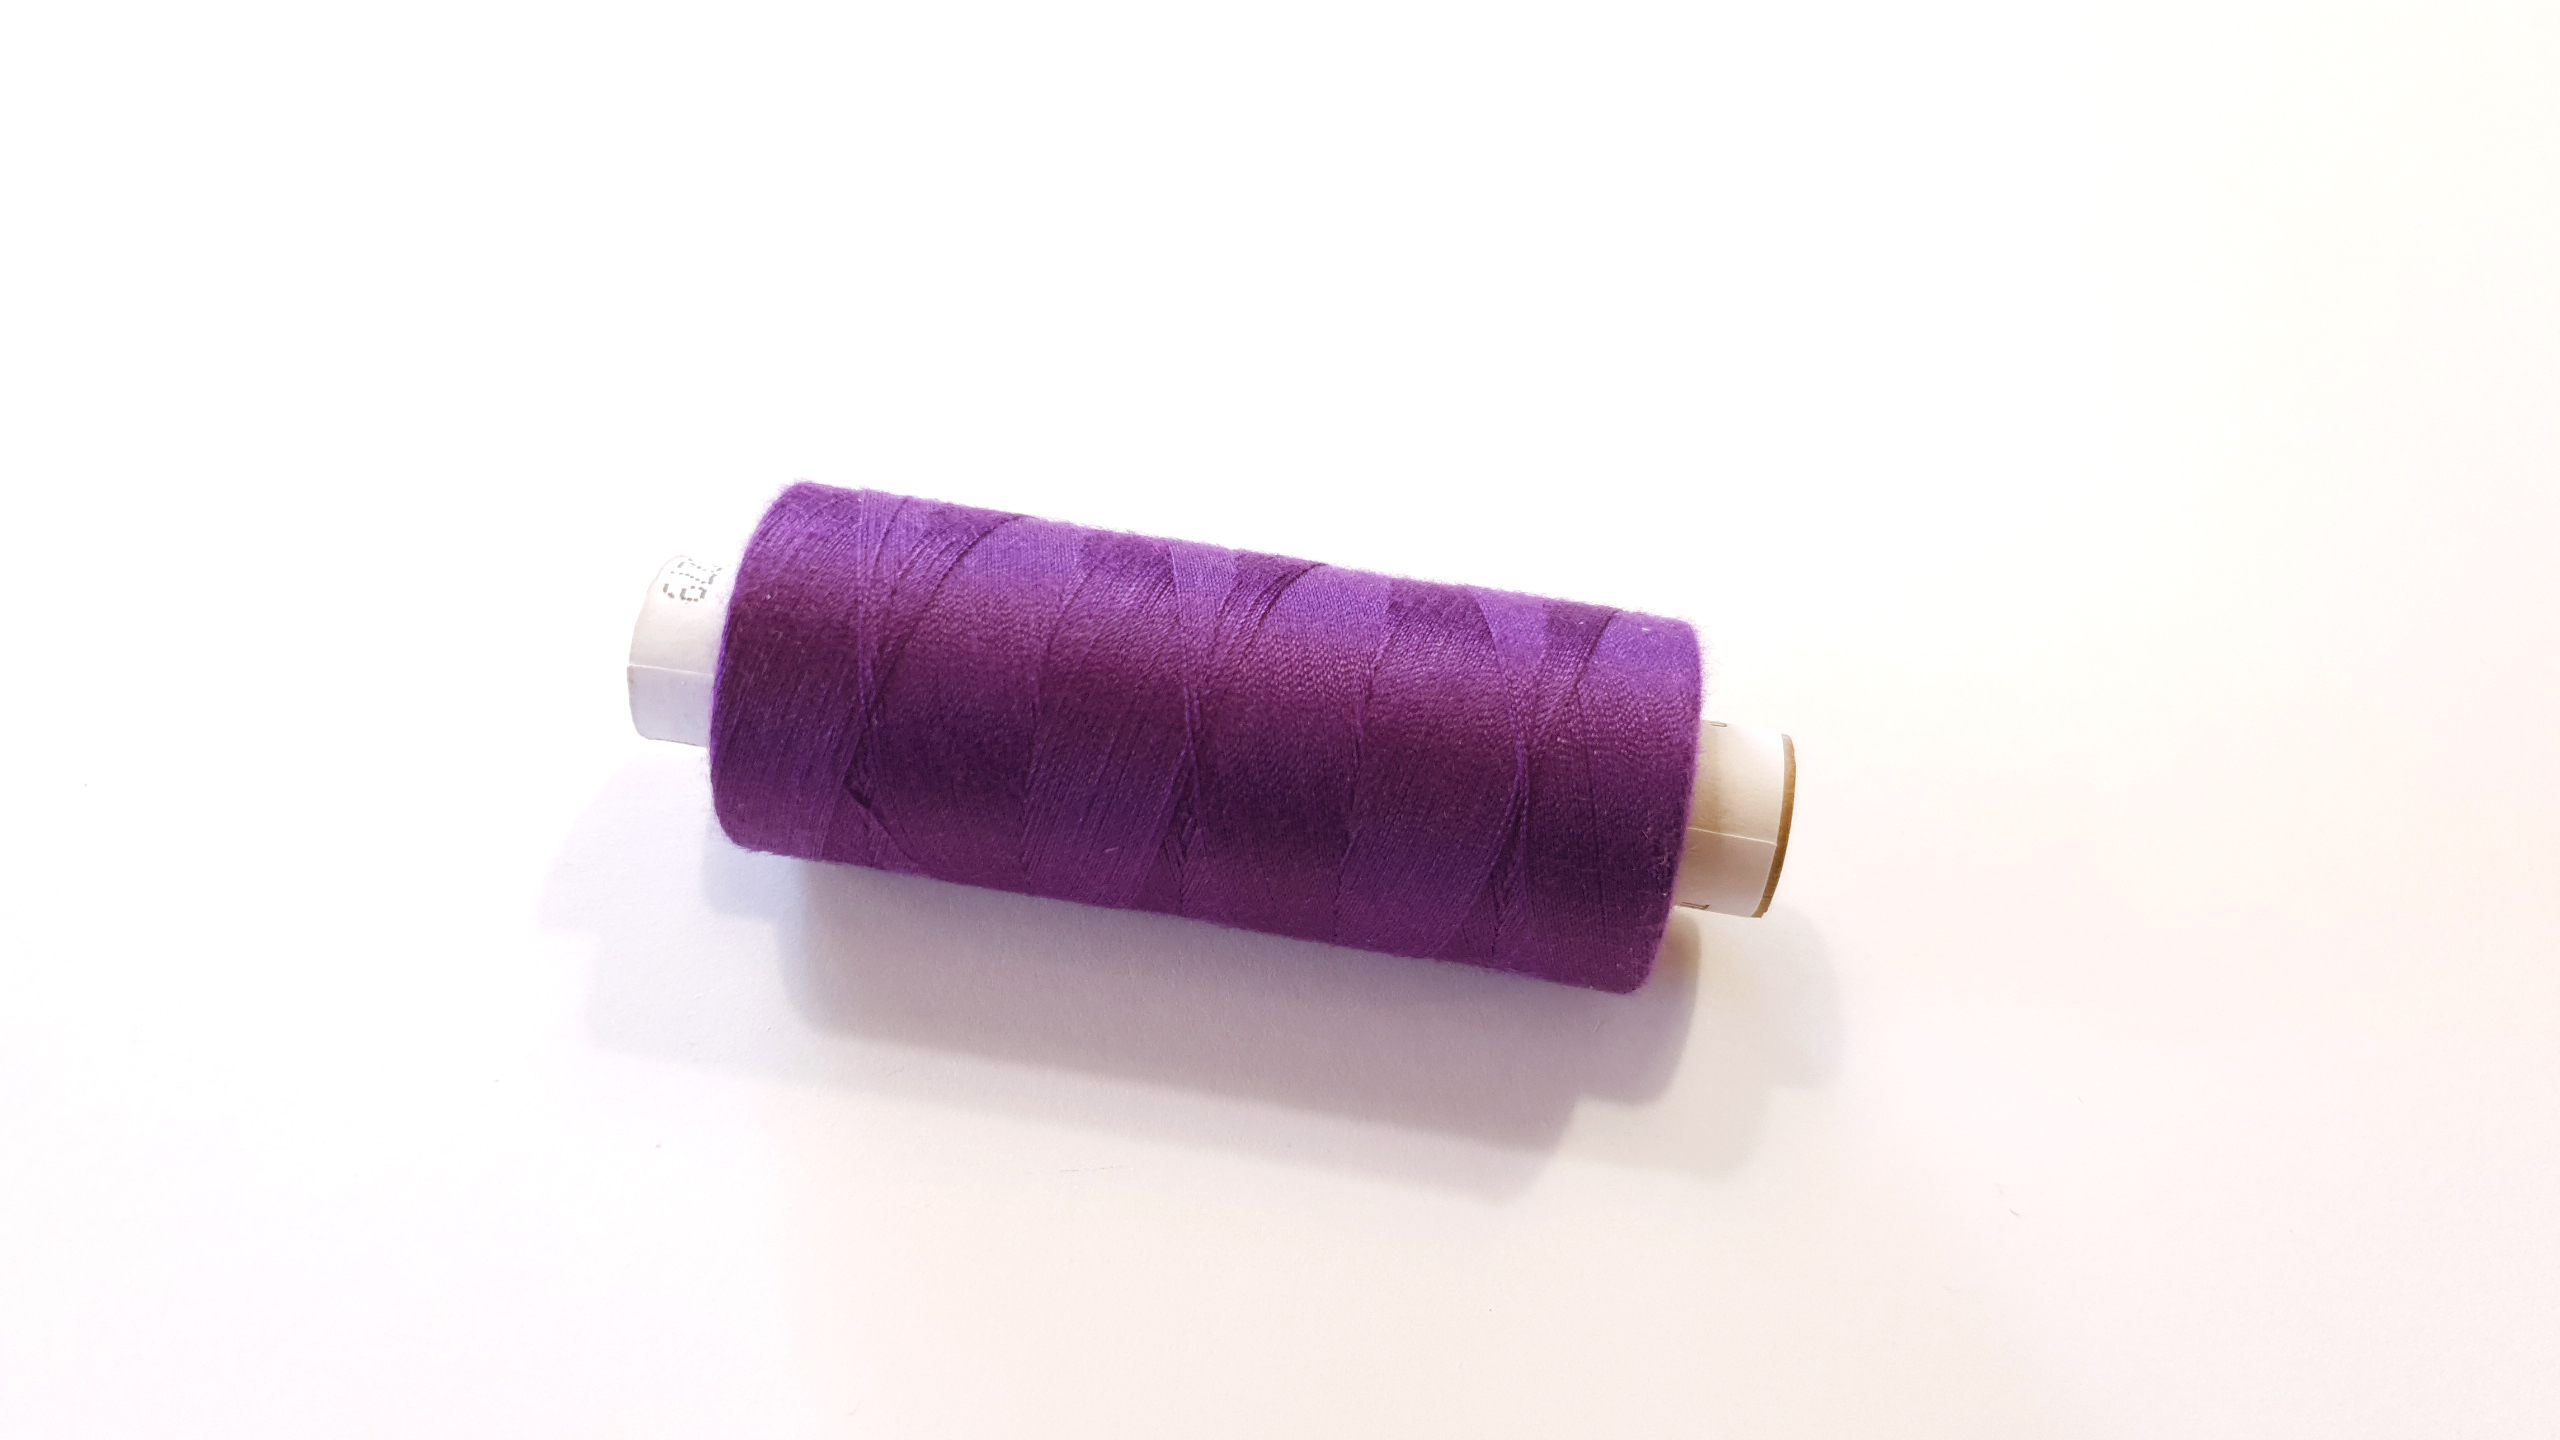 Sewing thread 500m- purple 46